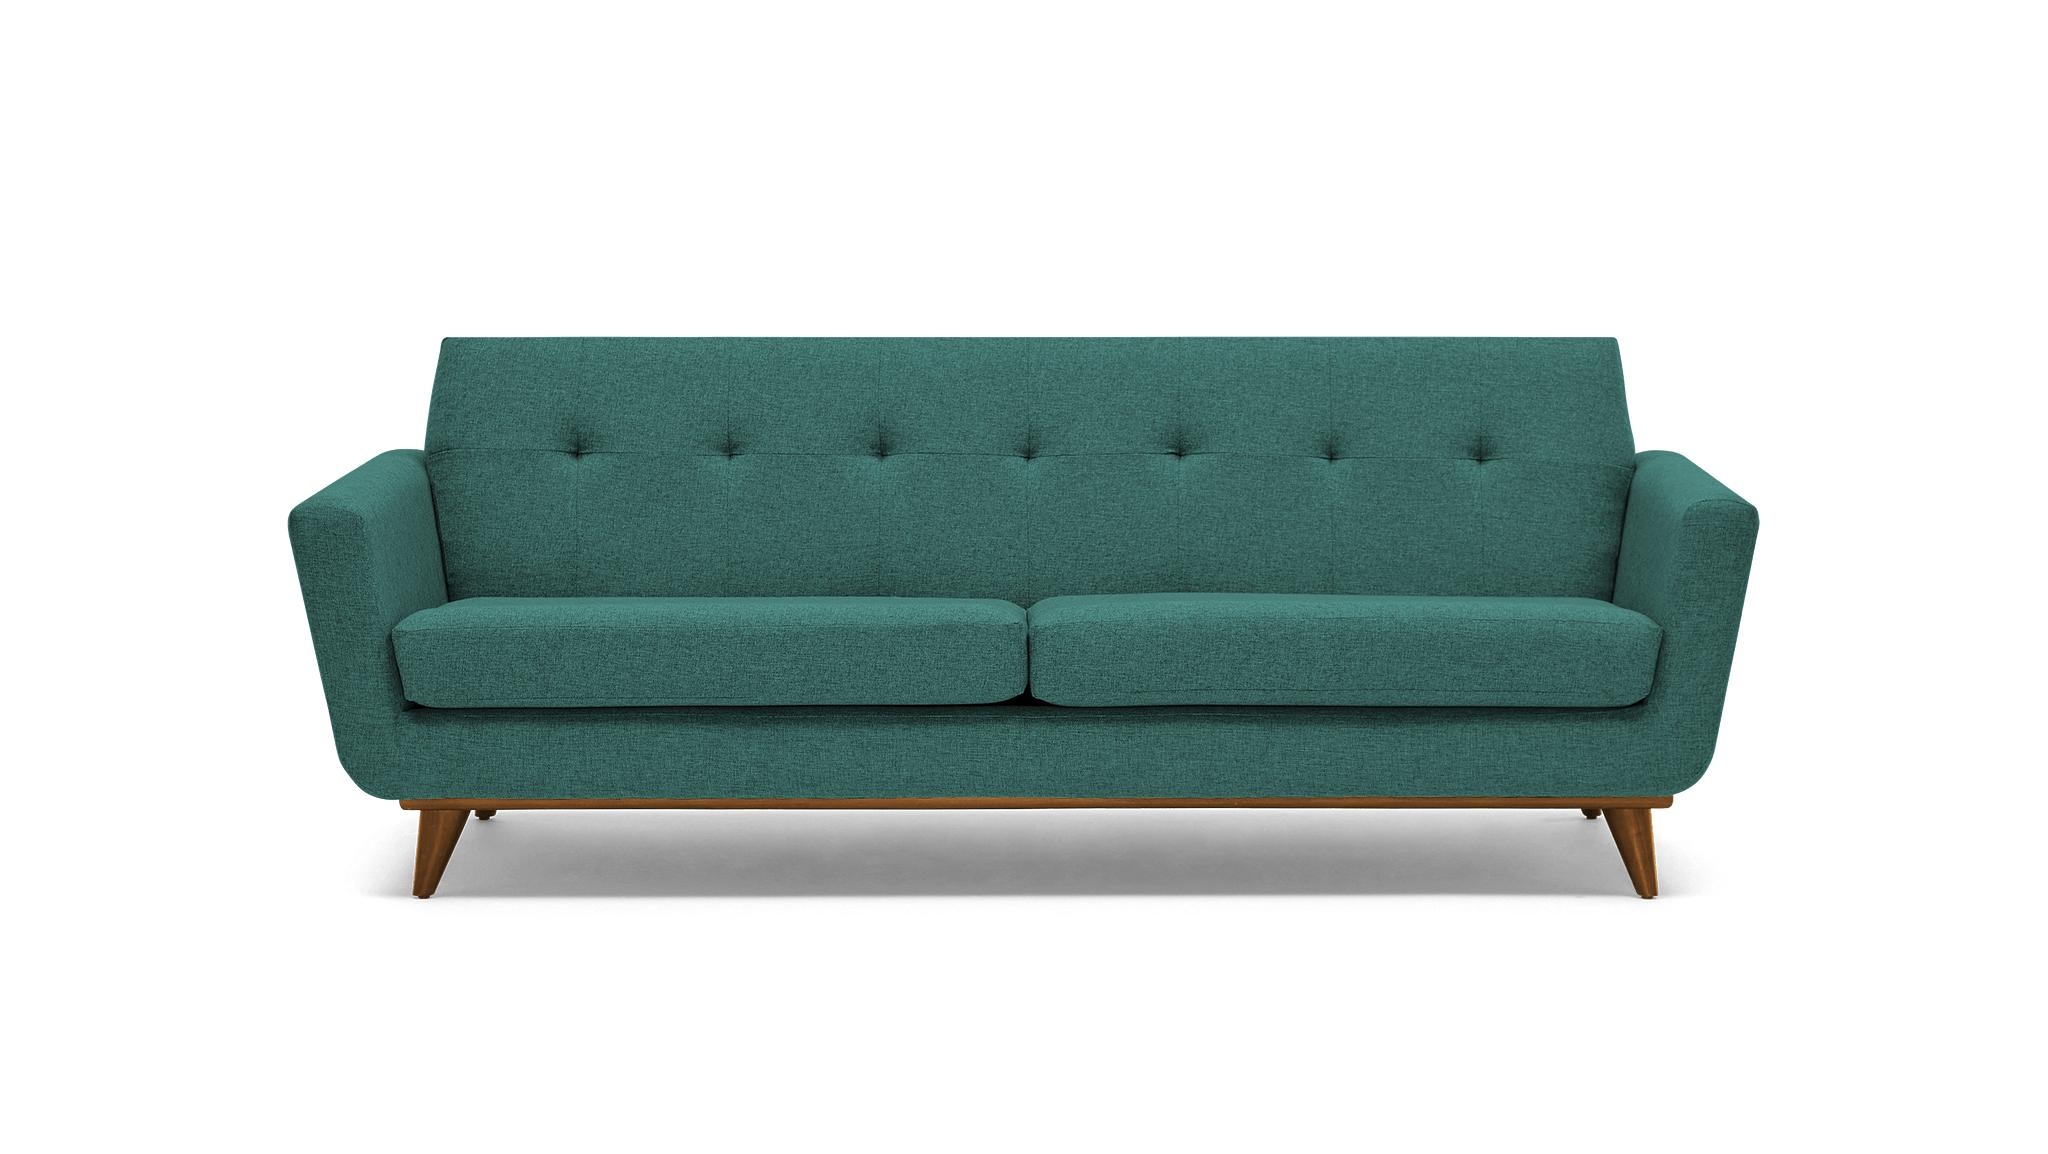 Blue Hughes Mid Century Modern Sofa - Prime Peacock - Mocha - Image 0